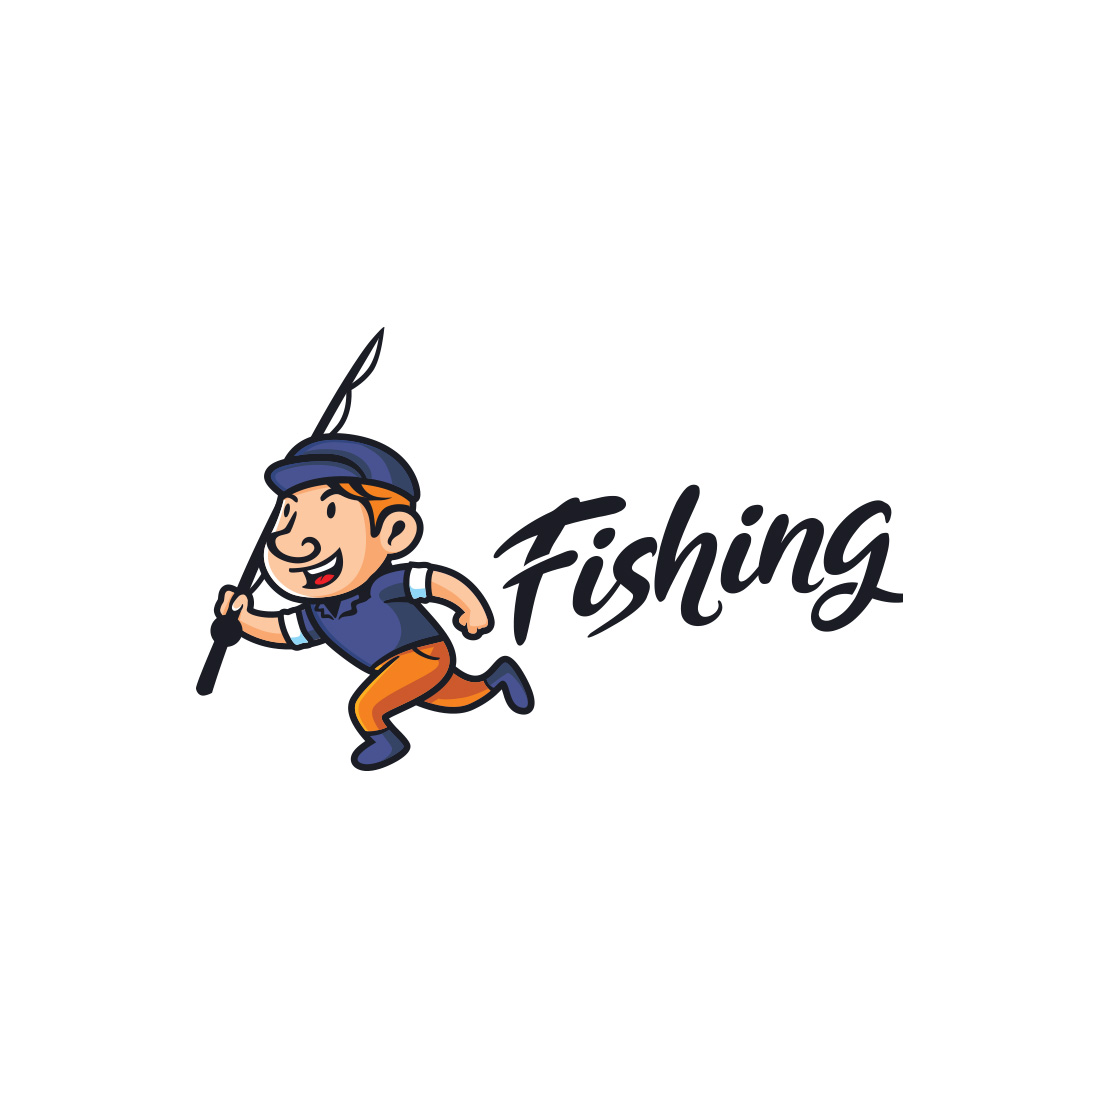 Retro Vintage Angler Character Mascot Logo cover image.